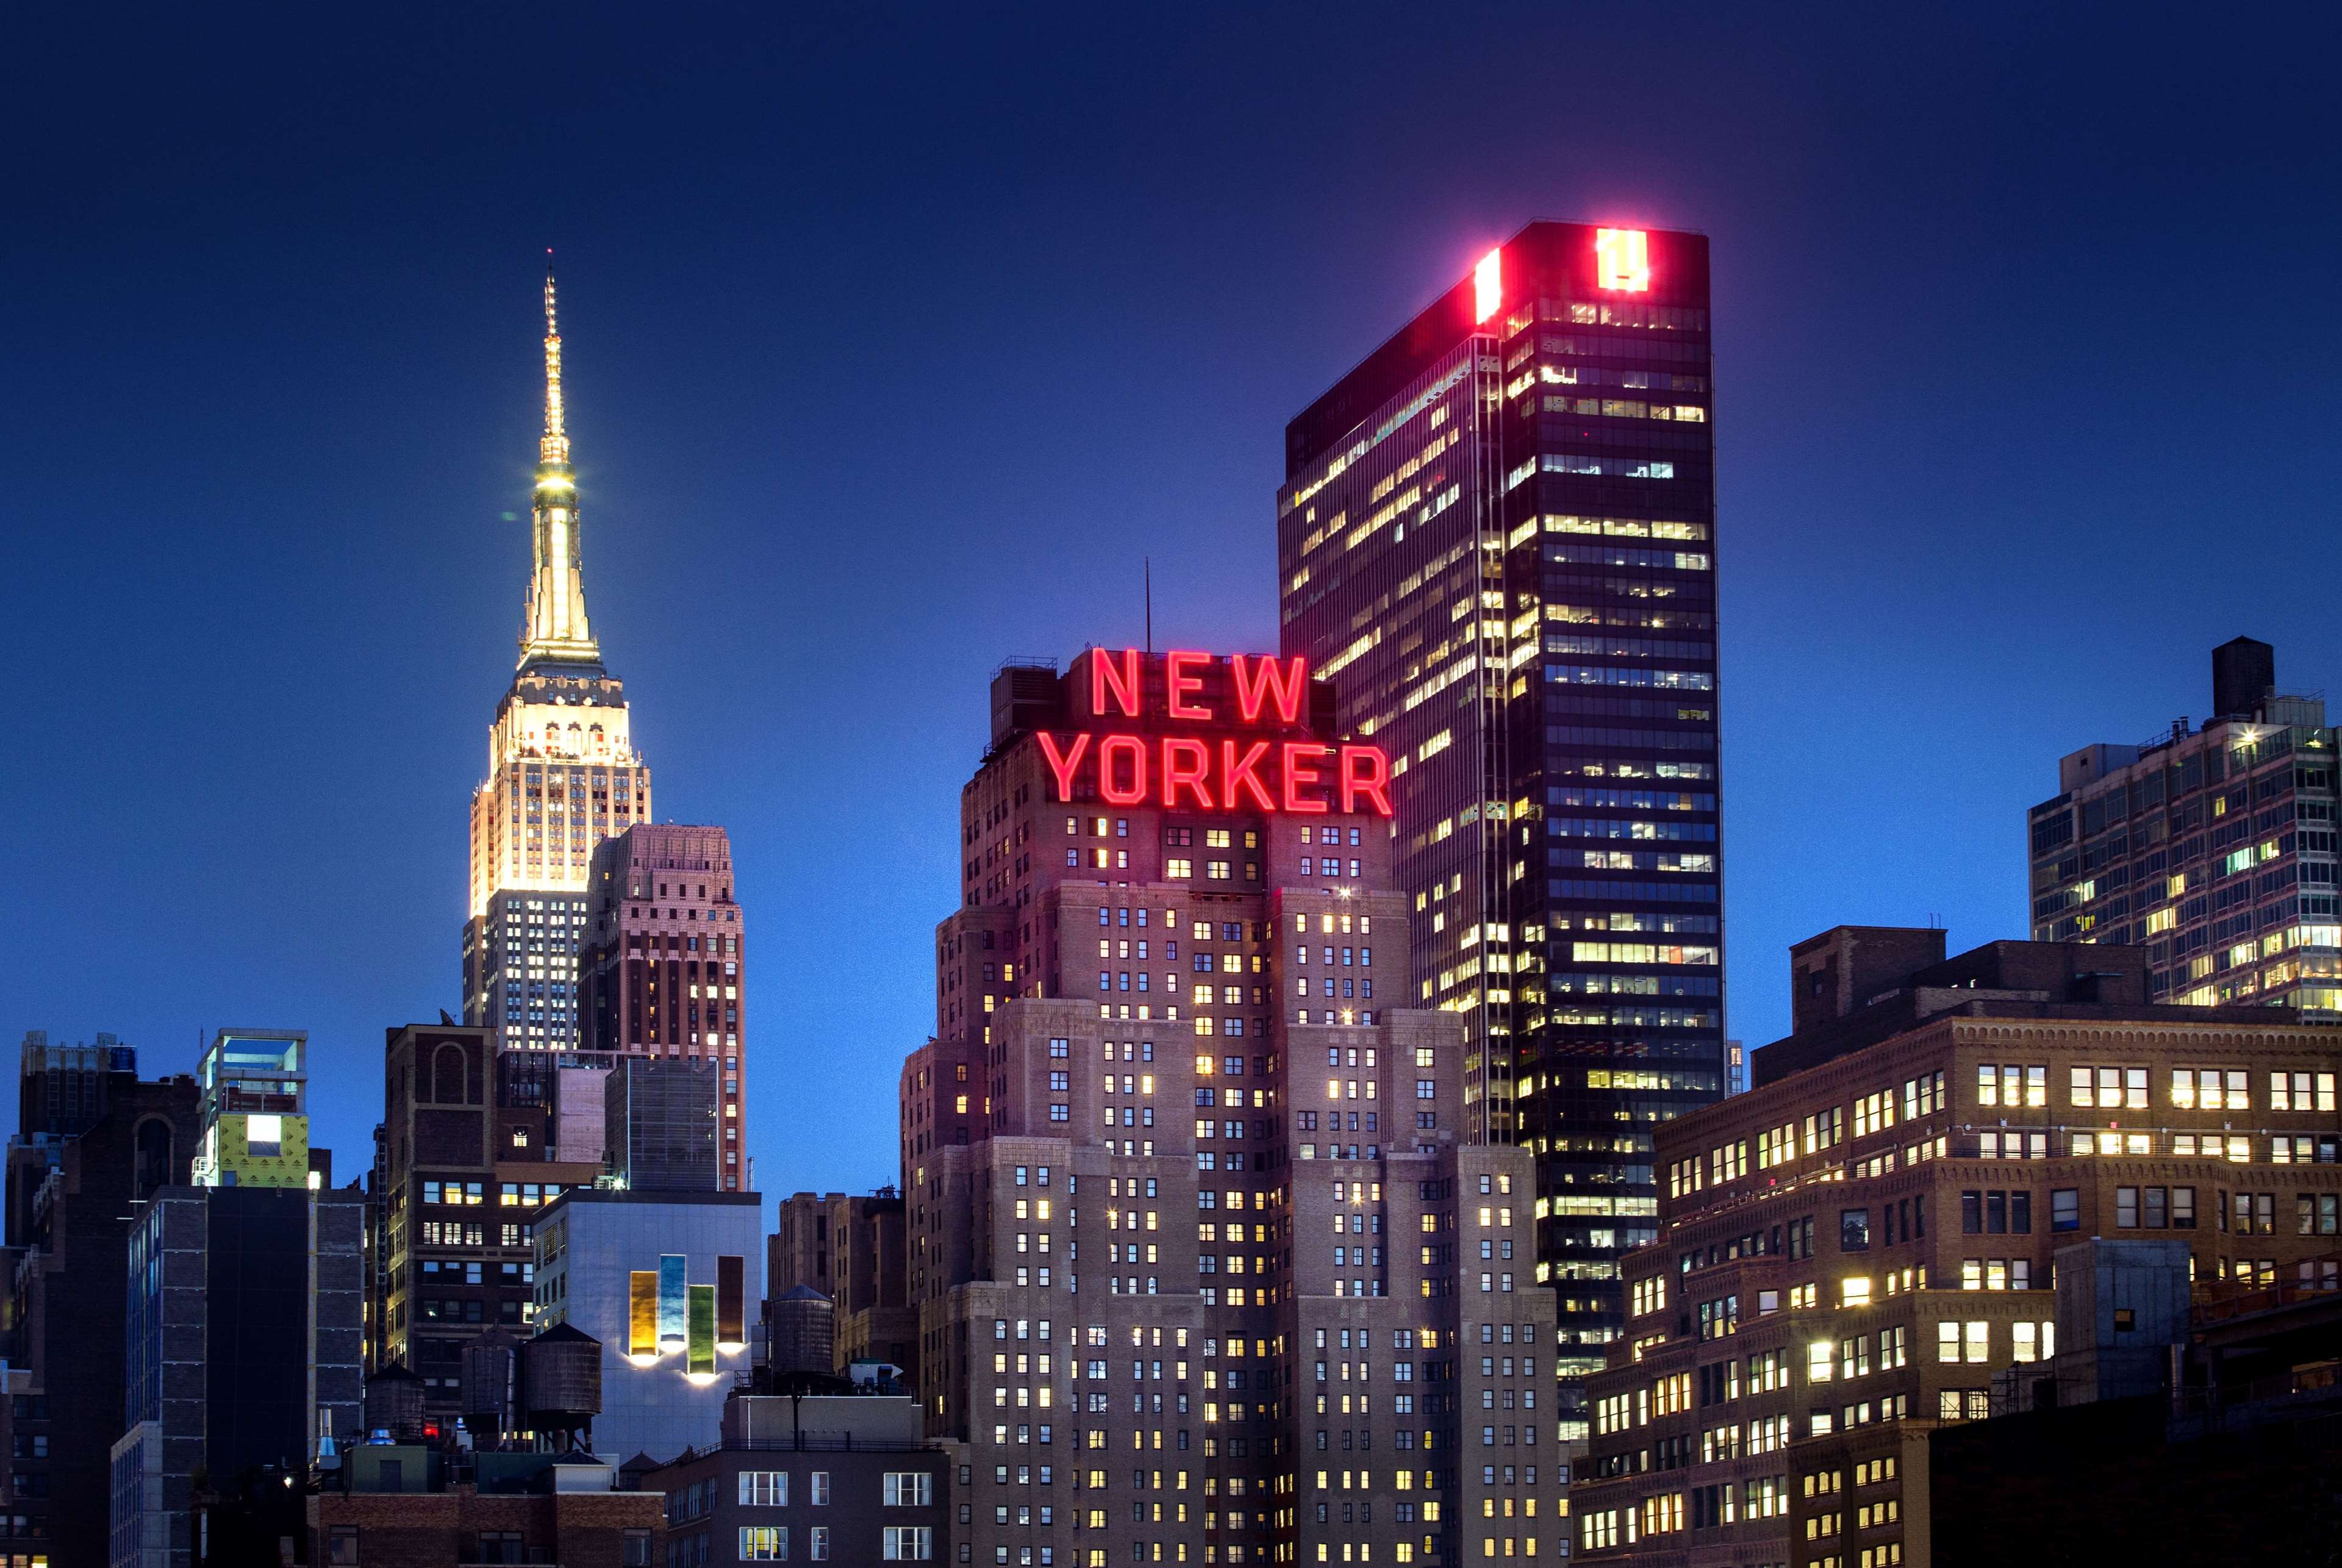 The New Yorker -  A Wyndham Hotel